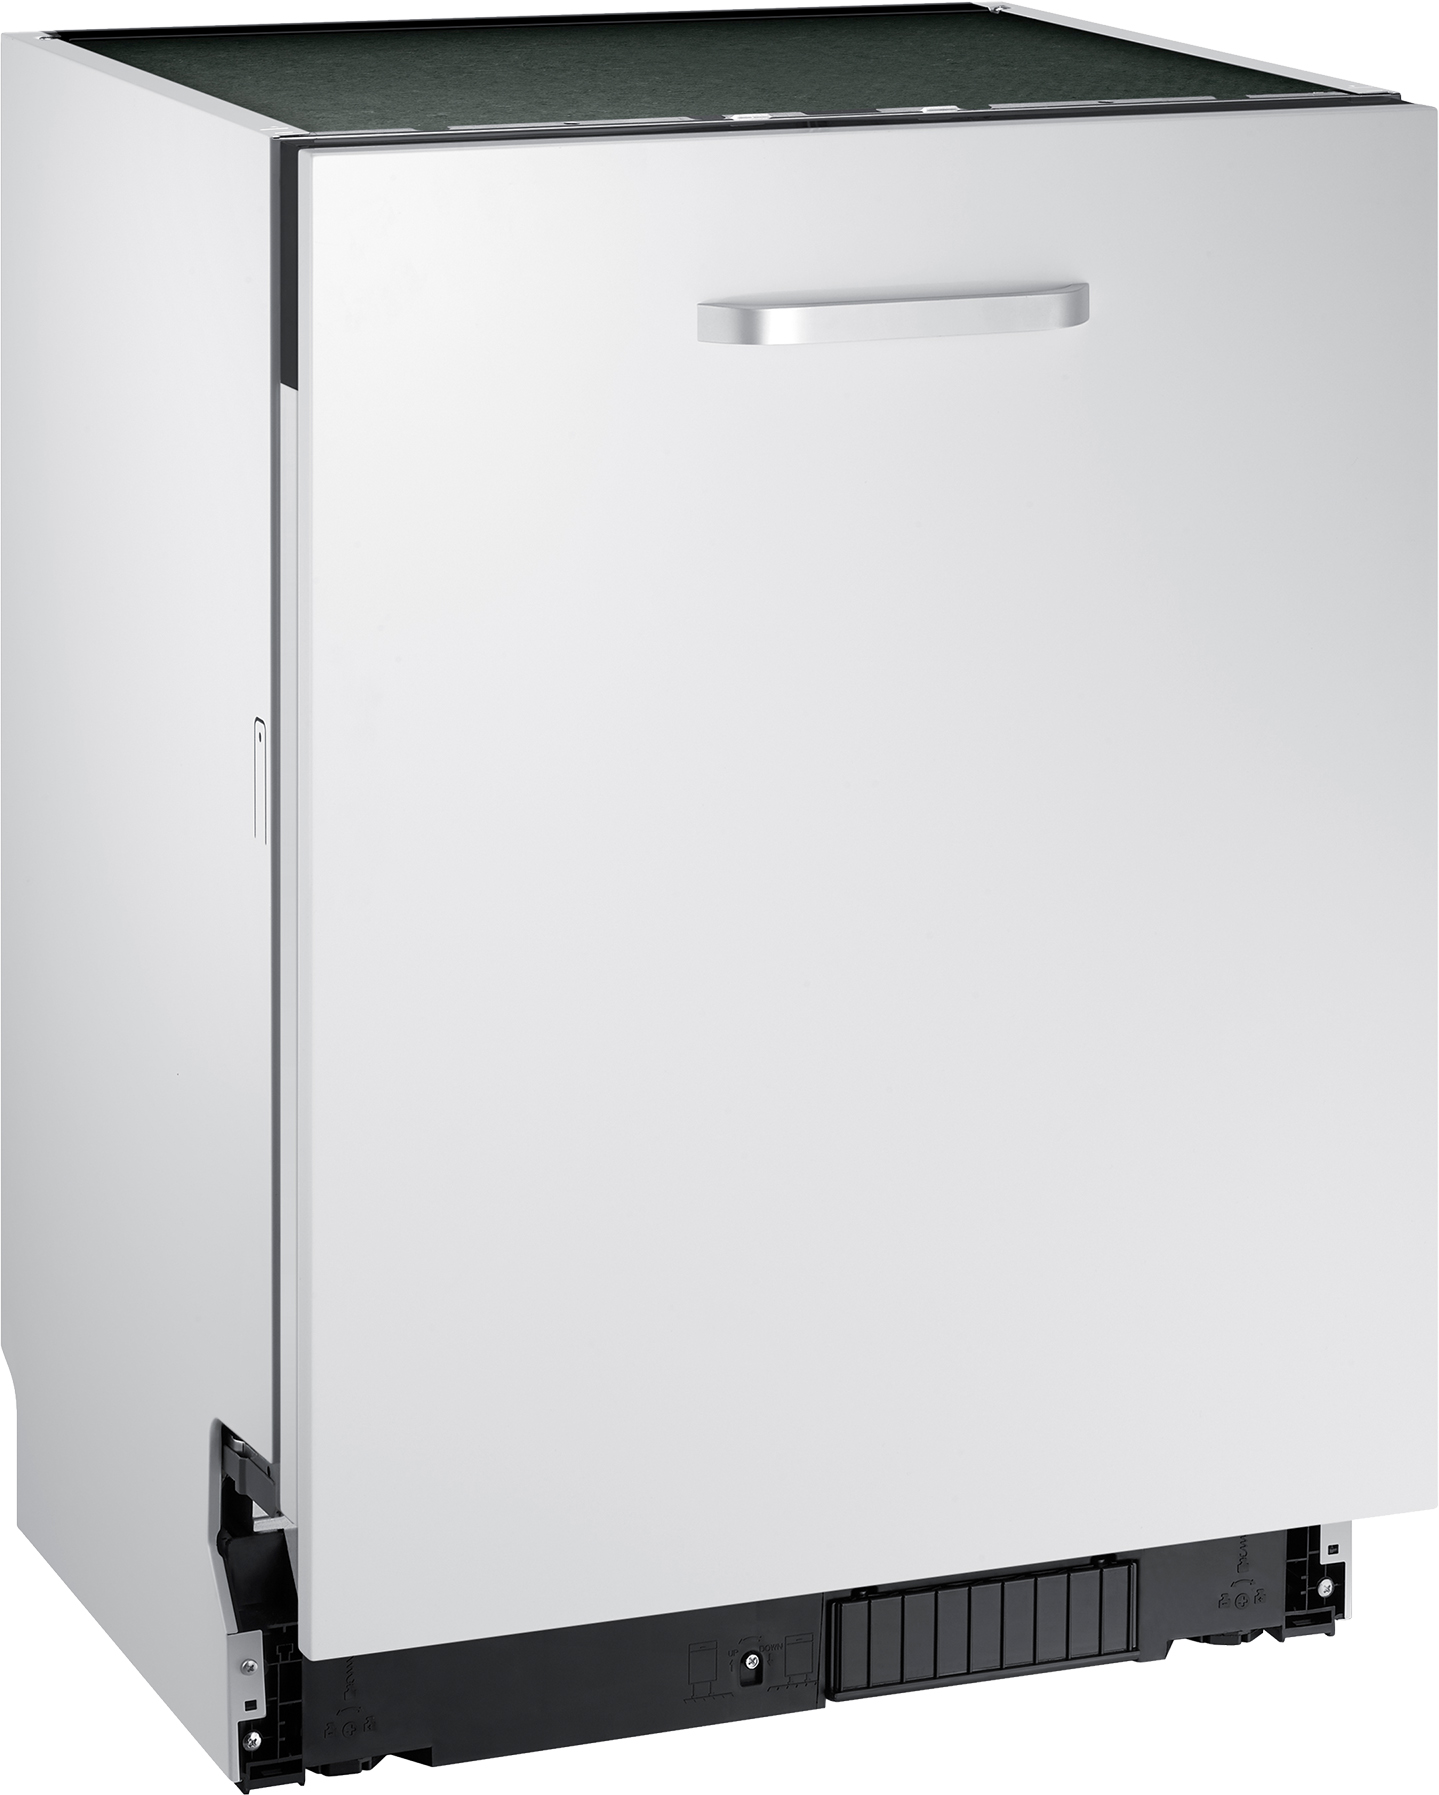 Посудомоечная машина Samsung DW60M5050BB/WT цена 17999.00 грн - фотография 2